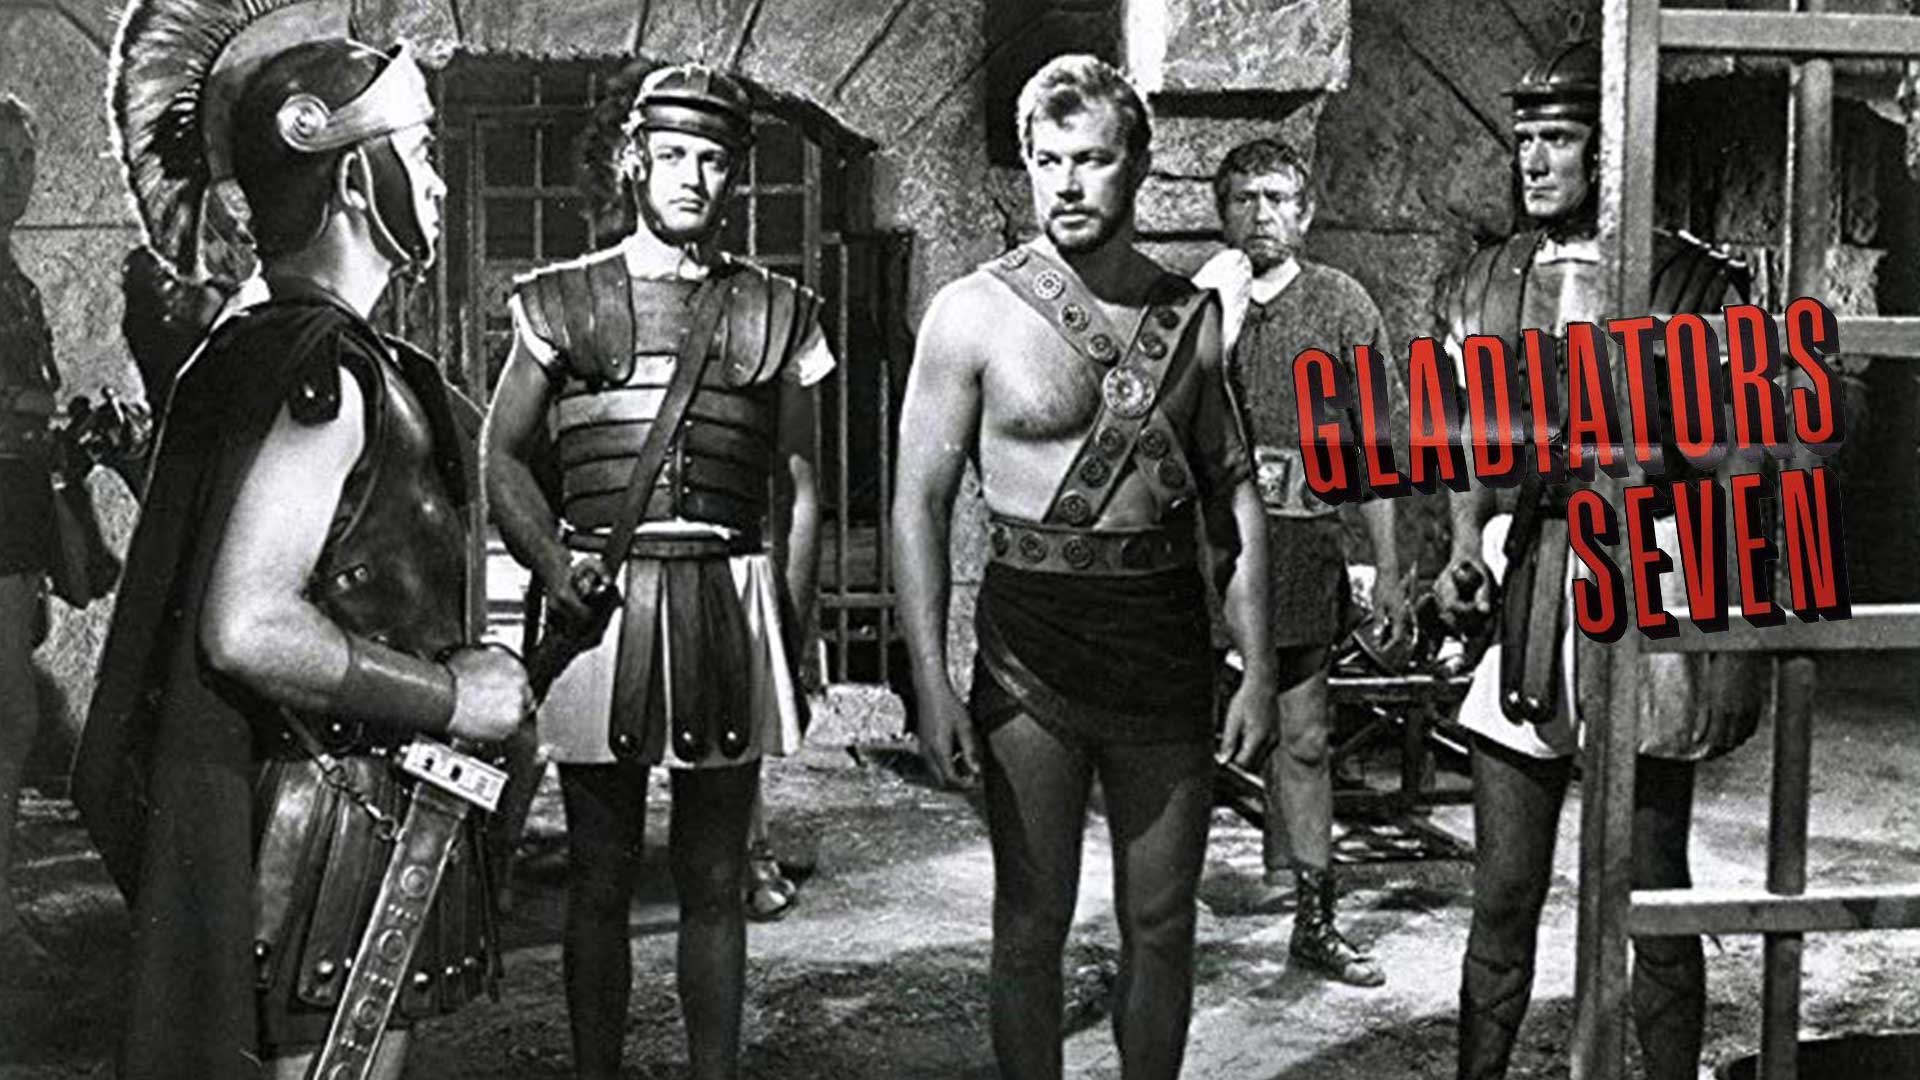 Gladiators Seven